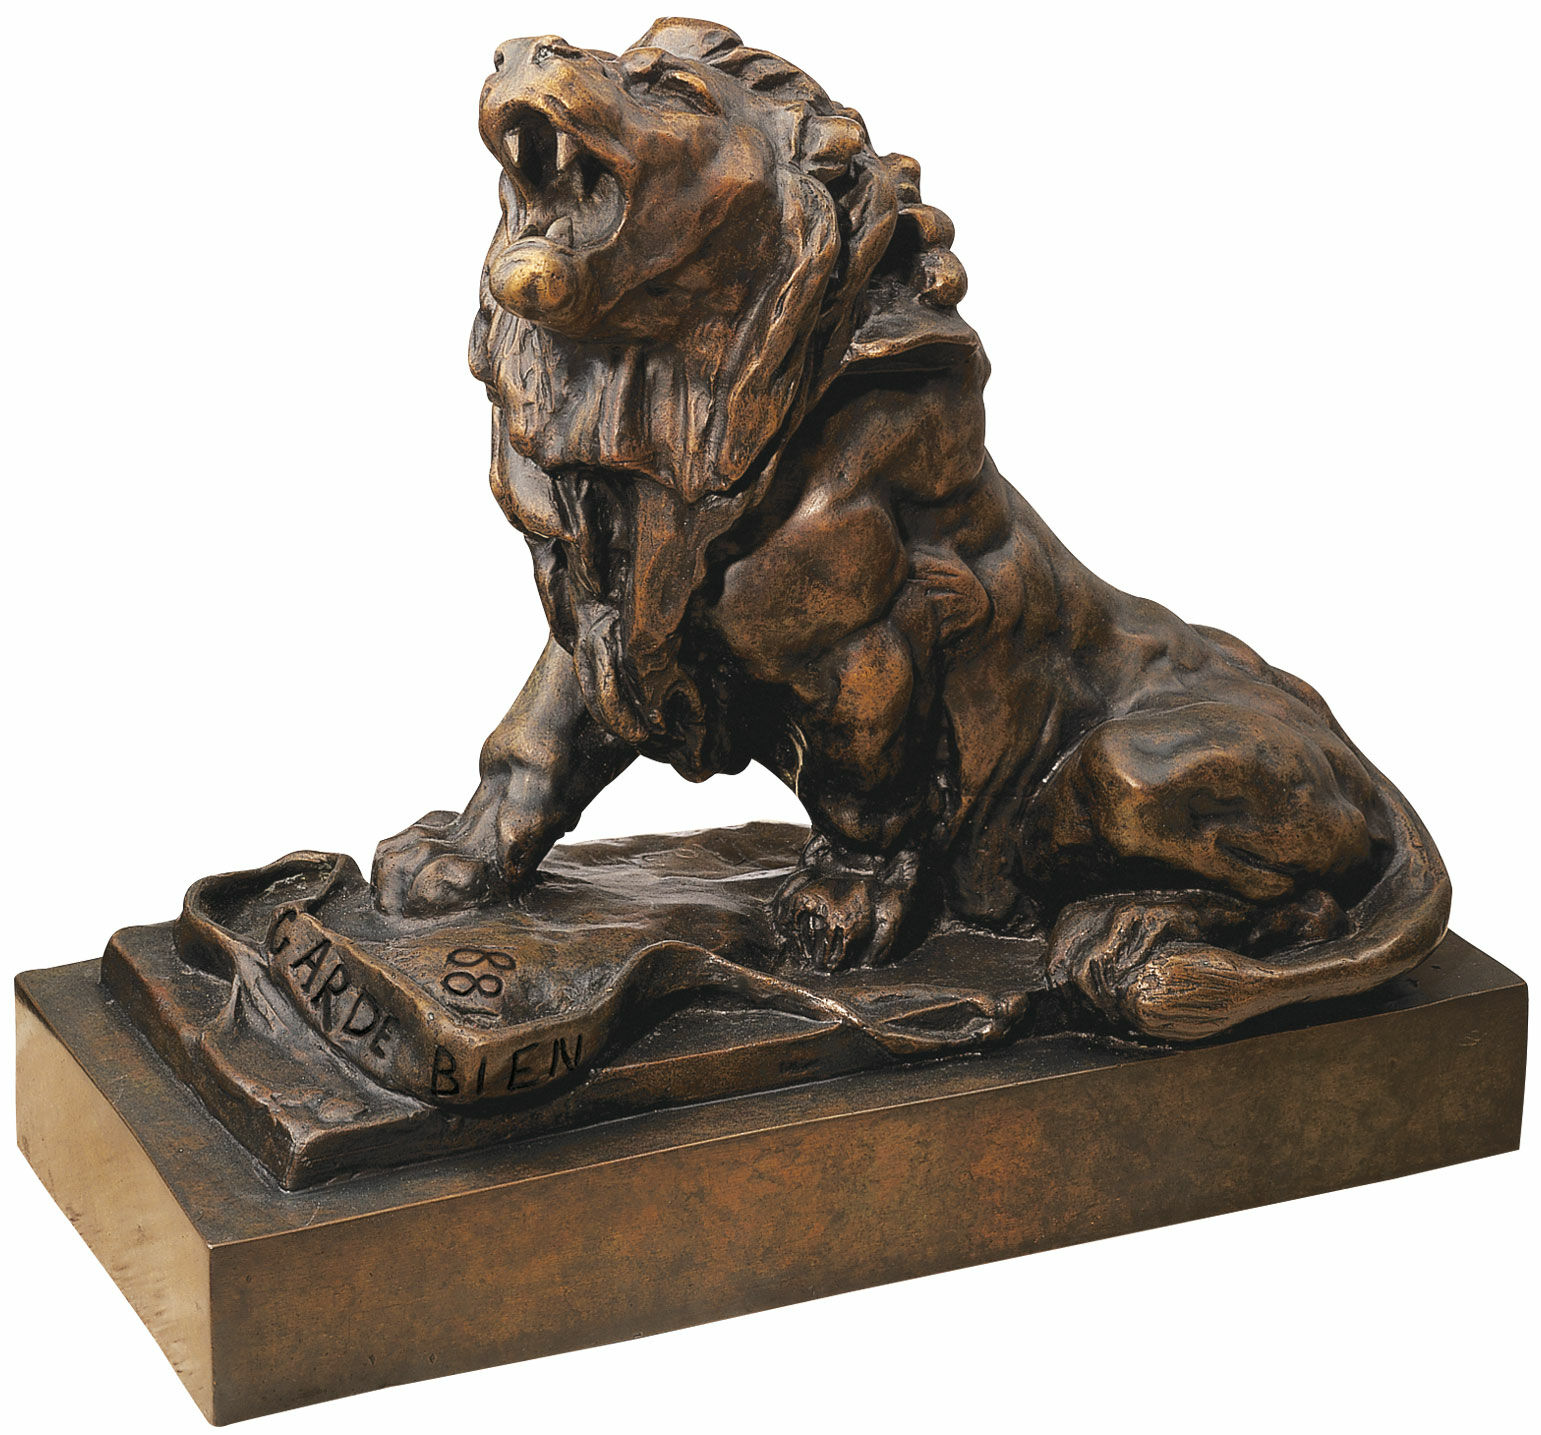 Sculpture "The Weeping Lion" (Le lion qui pleure), version in bonded bronze by Auguste Rodin